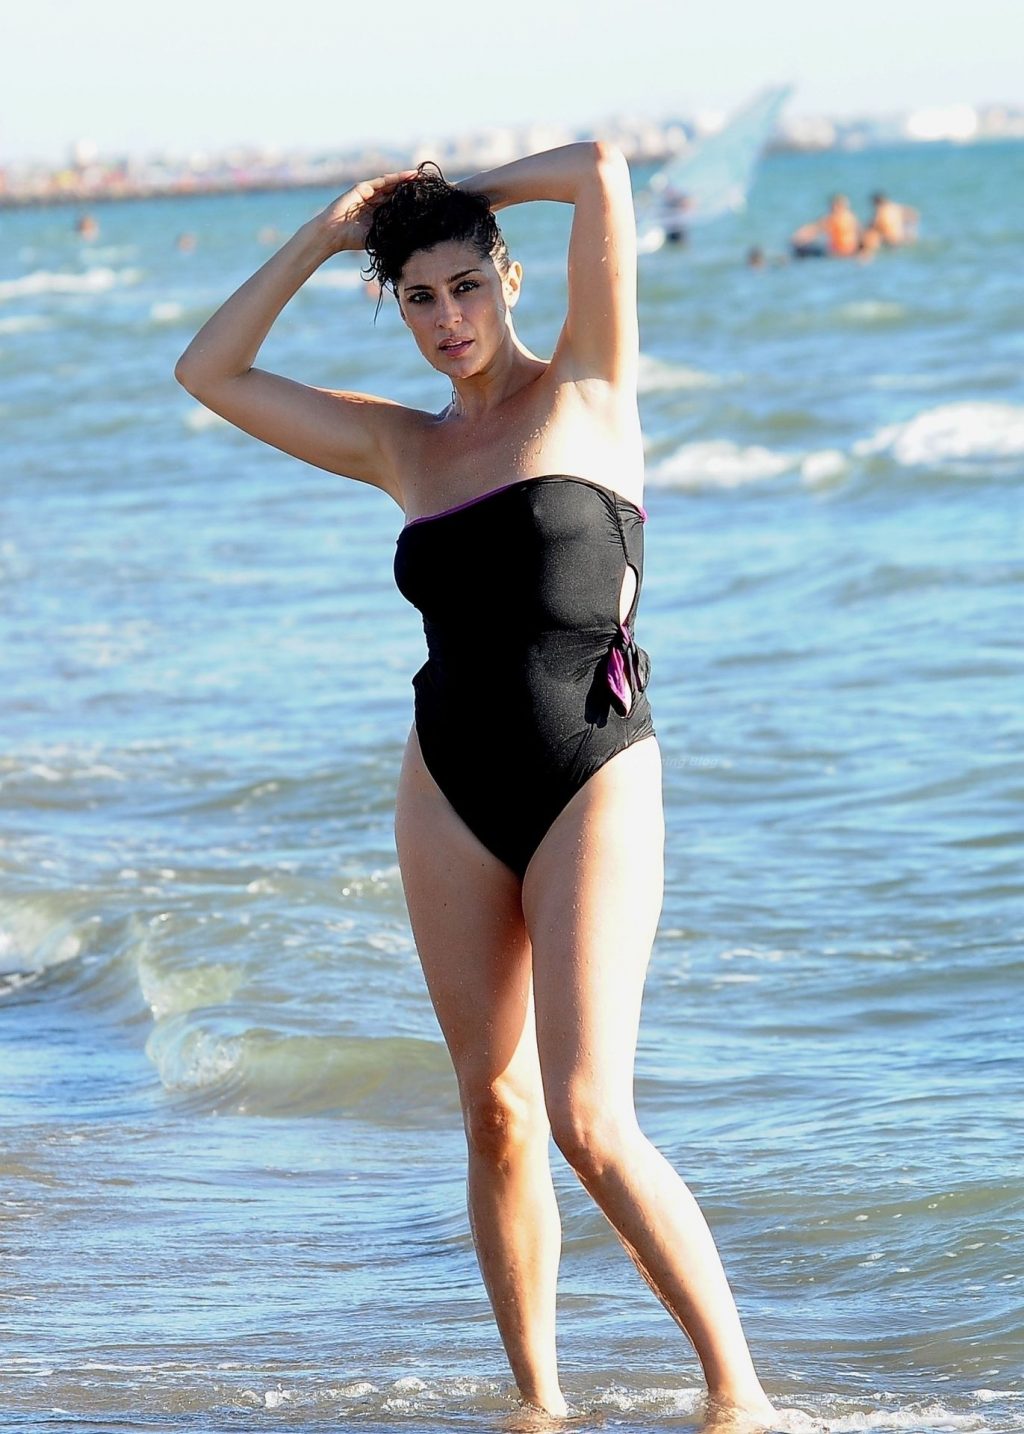 Elisa Isoardi Shows Off Her Stunning Figure on the Beach (57 Photos)